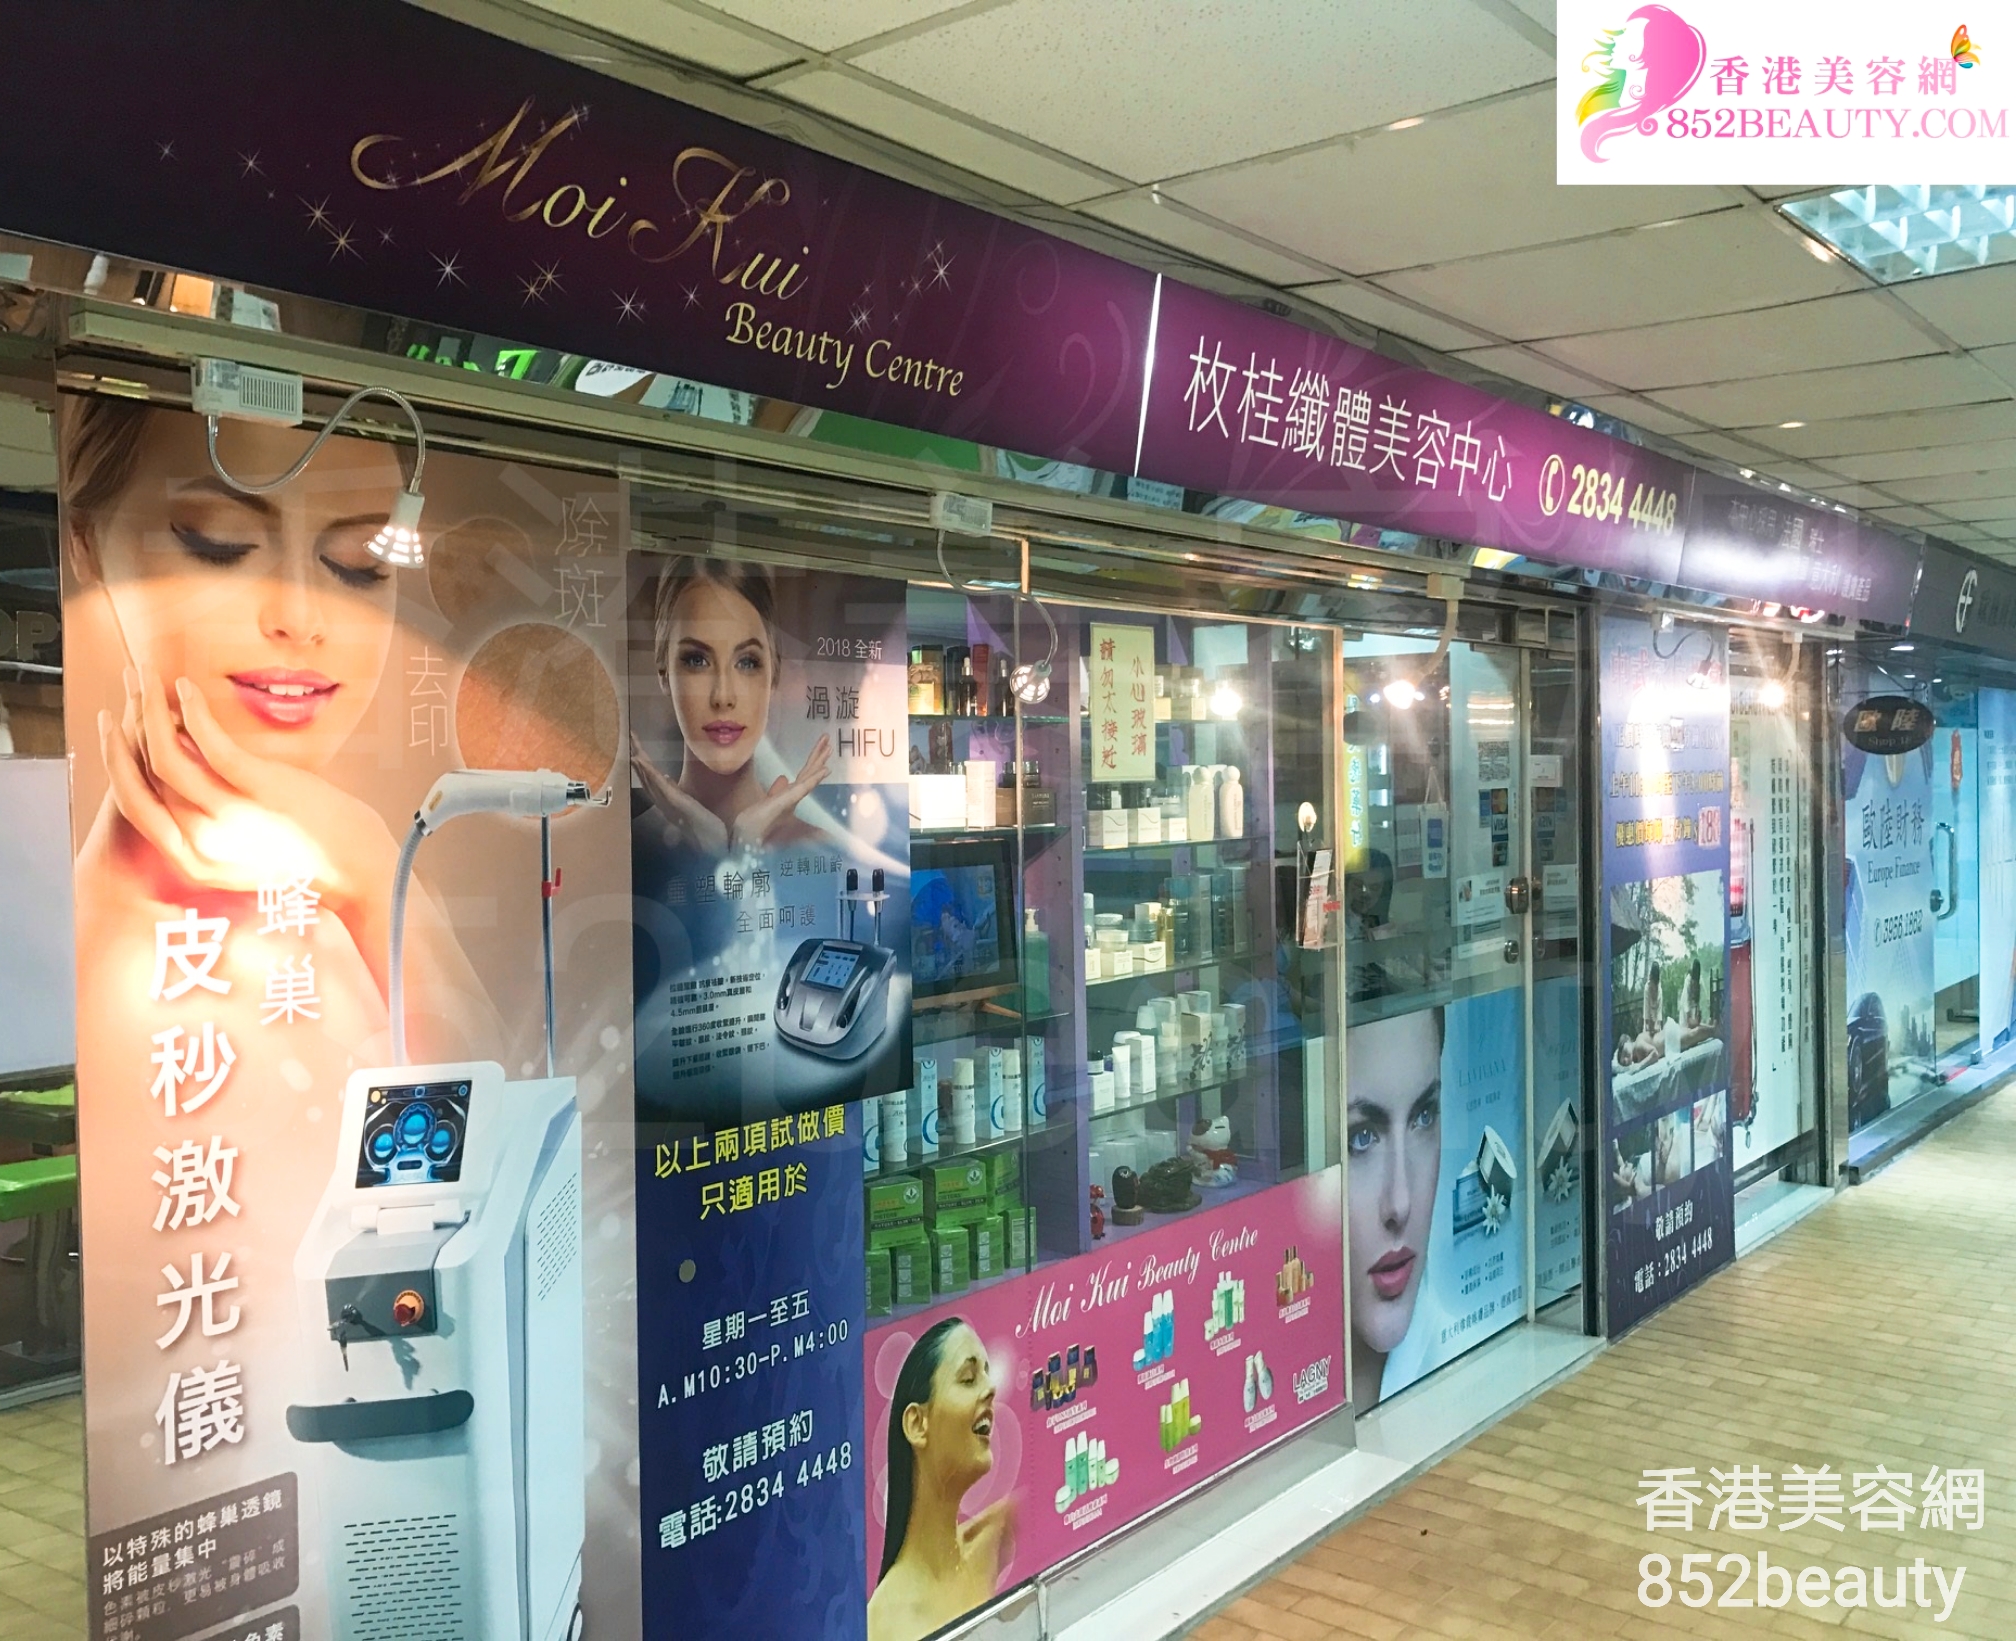 Hair Removal: 枚桂纖體美容中心 Moi Kui Beauty Centre